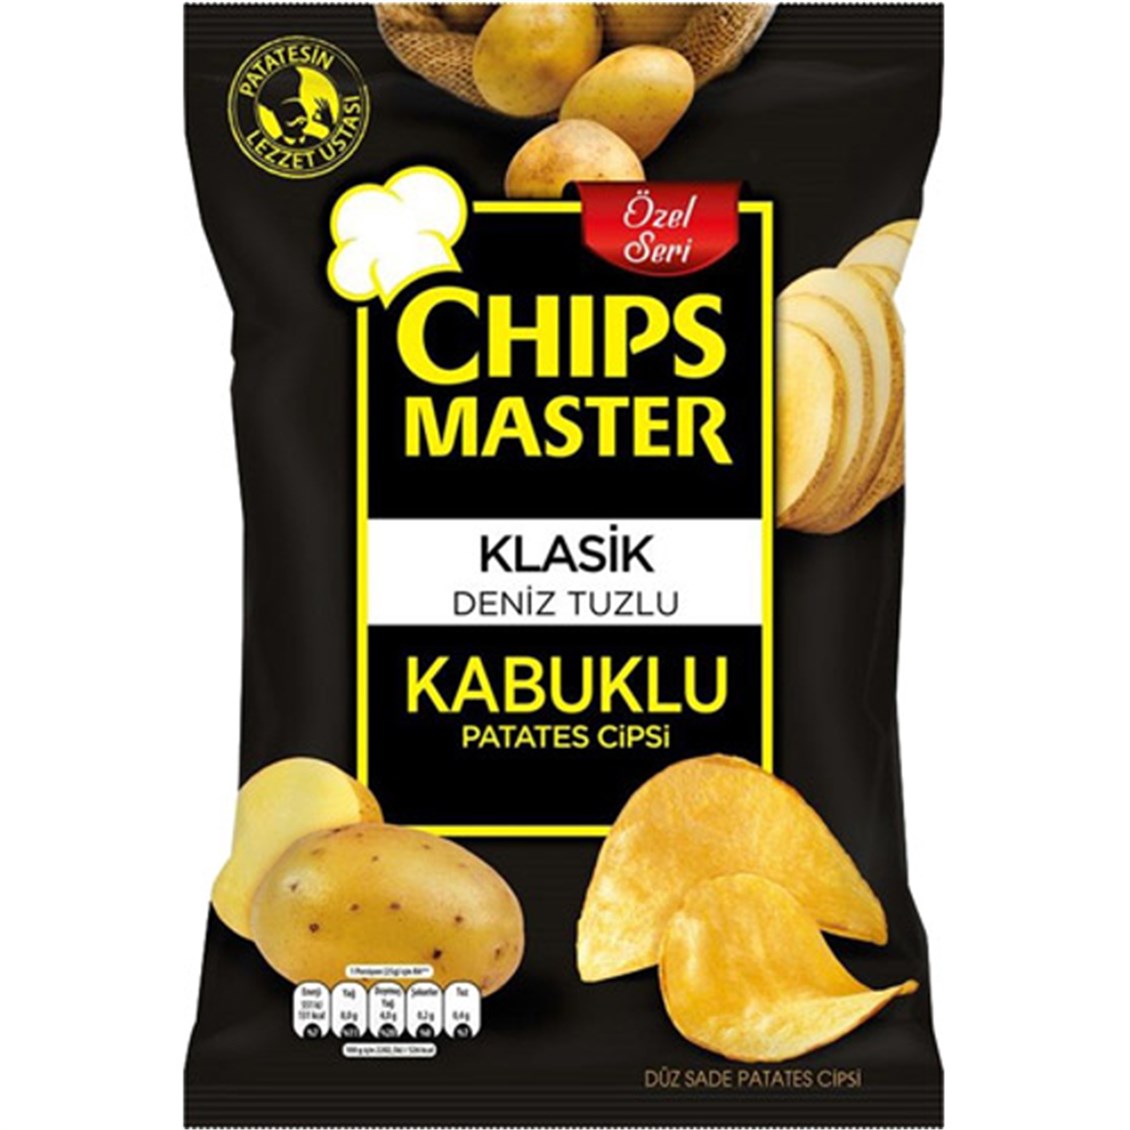 Chips Master Kabuklu Patates Cipsi 104 gr - Onur Market